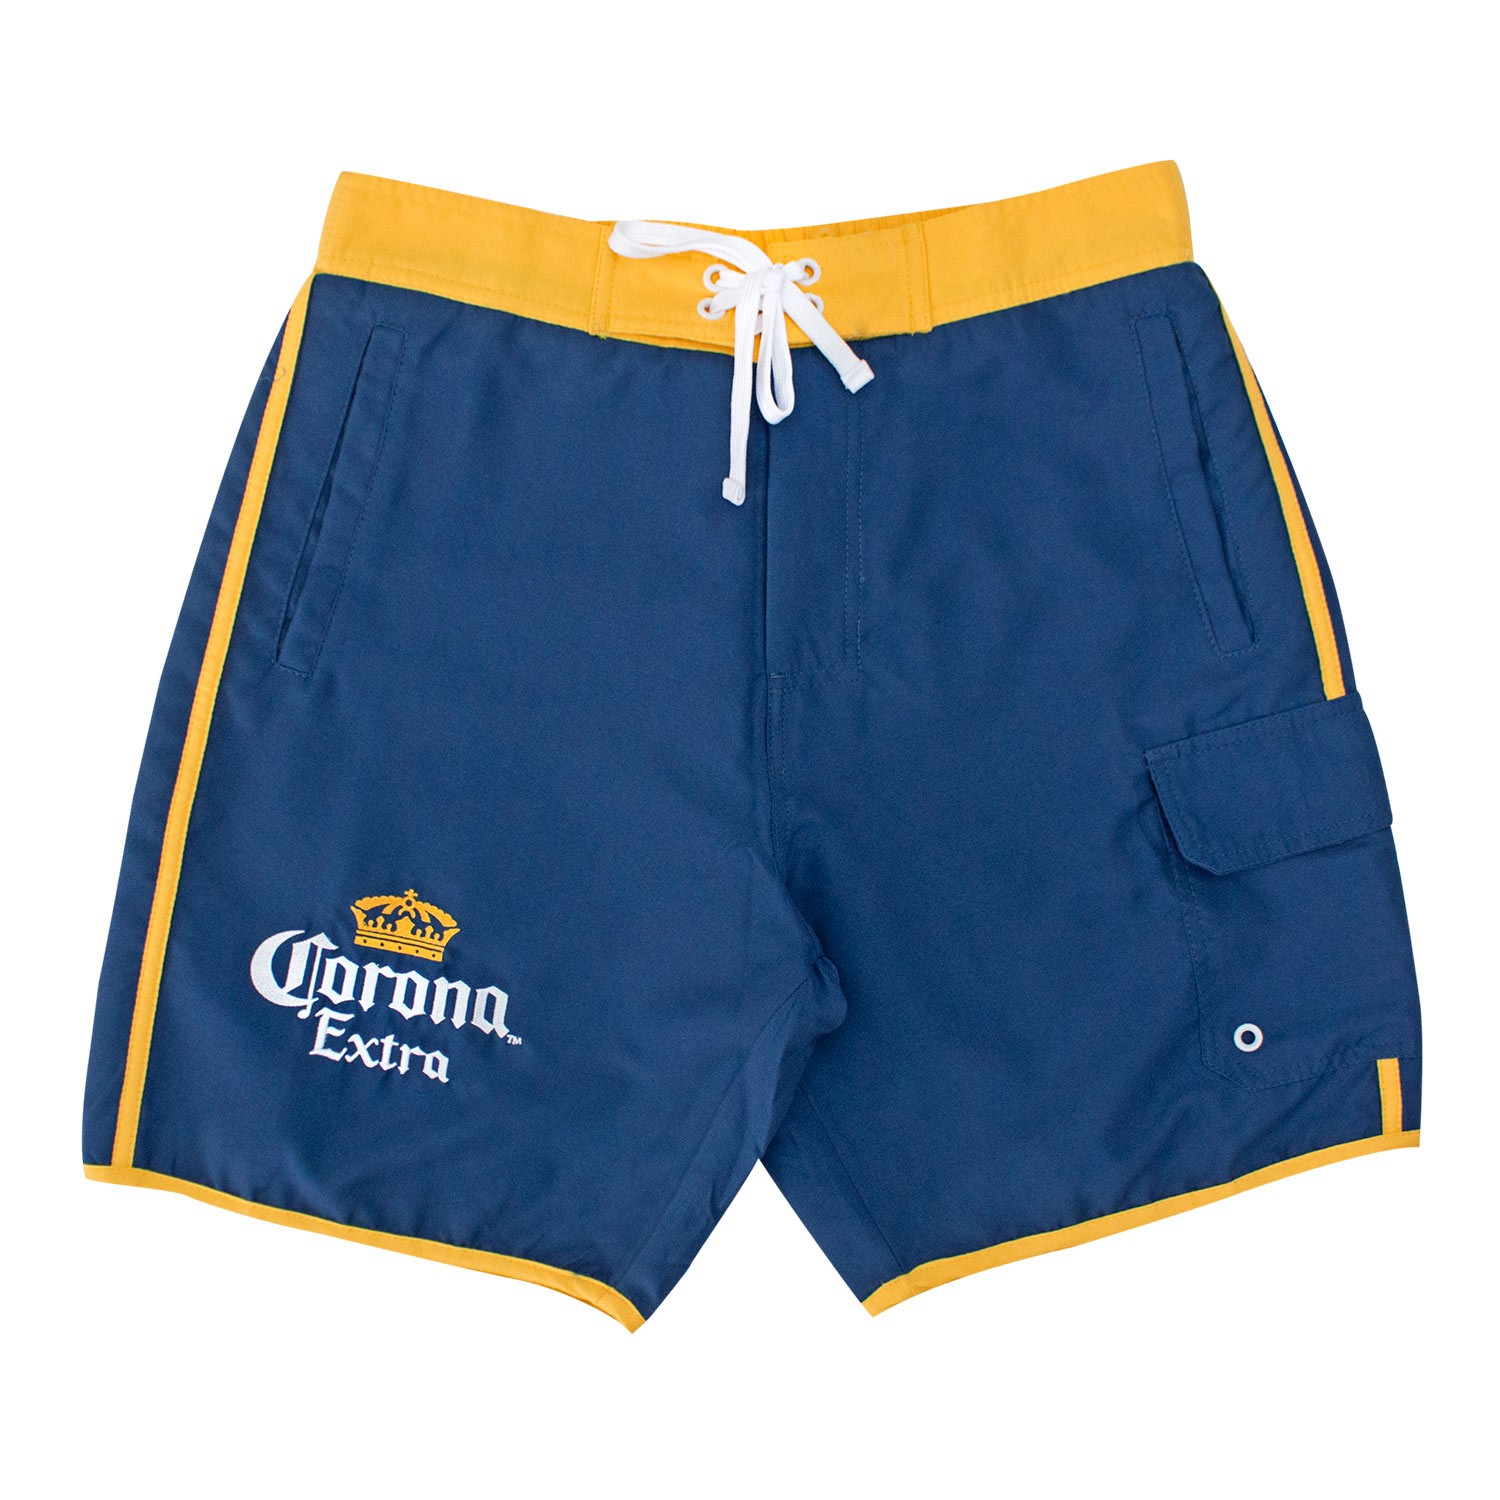 Corona Extra Gold Stripe Men's Board Shorts